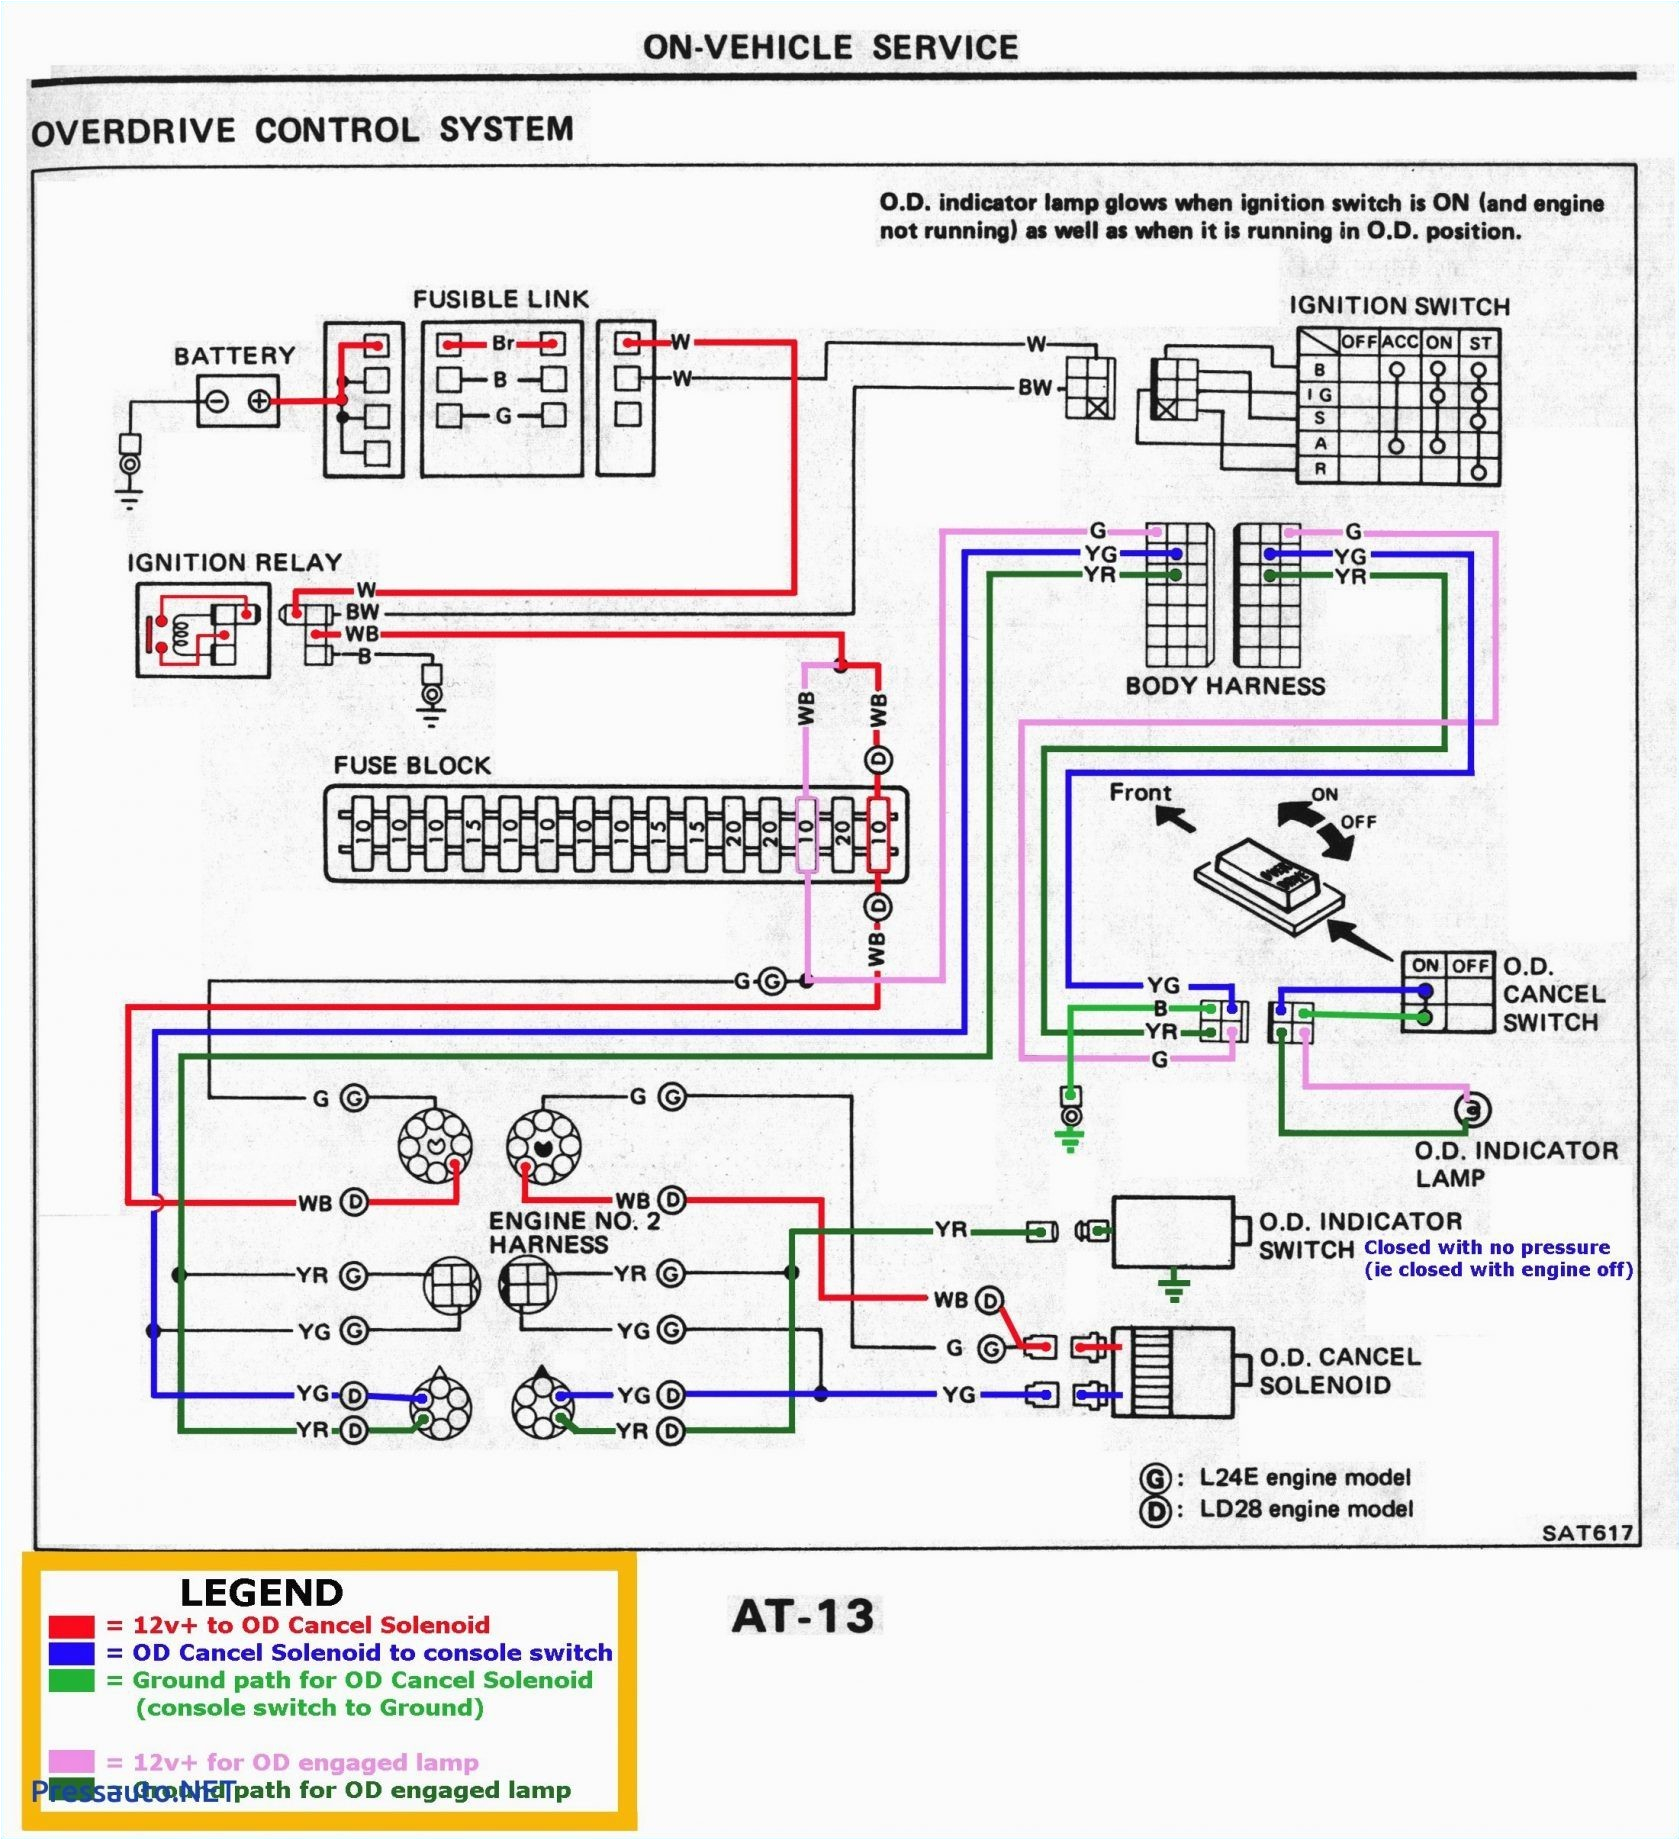 jaguar schematic diagrams wiring diagram megajaguar wiring diagrams wiring diagram centre jaguar radio wire harness diagram